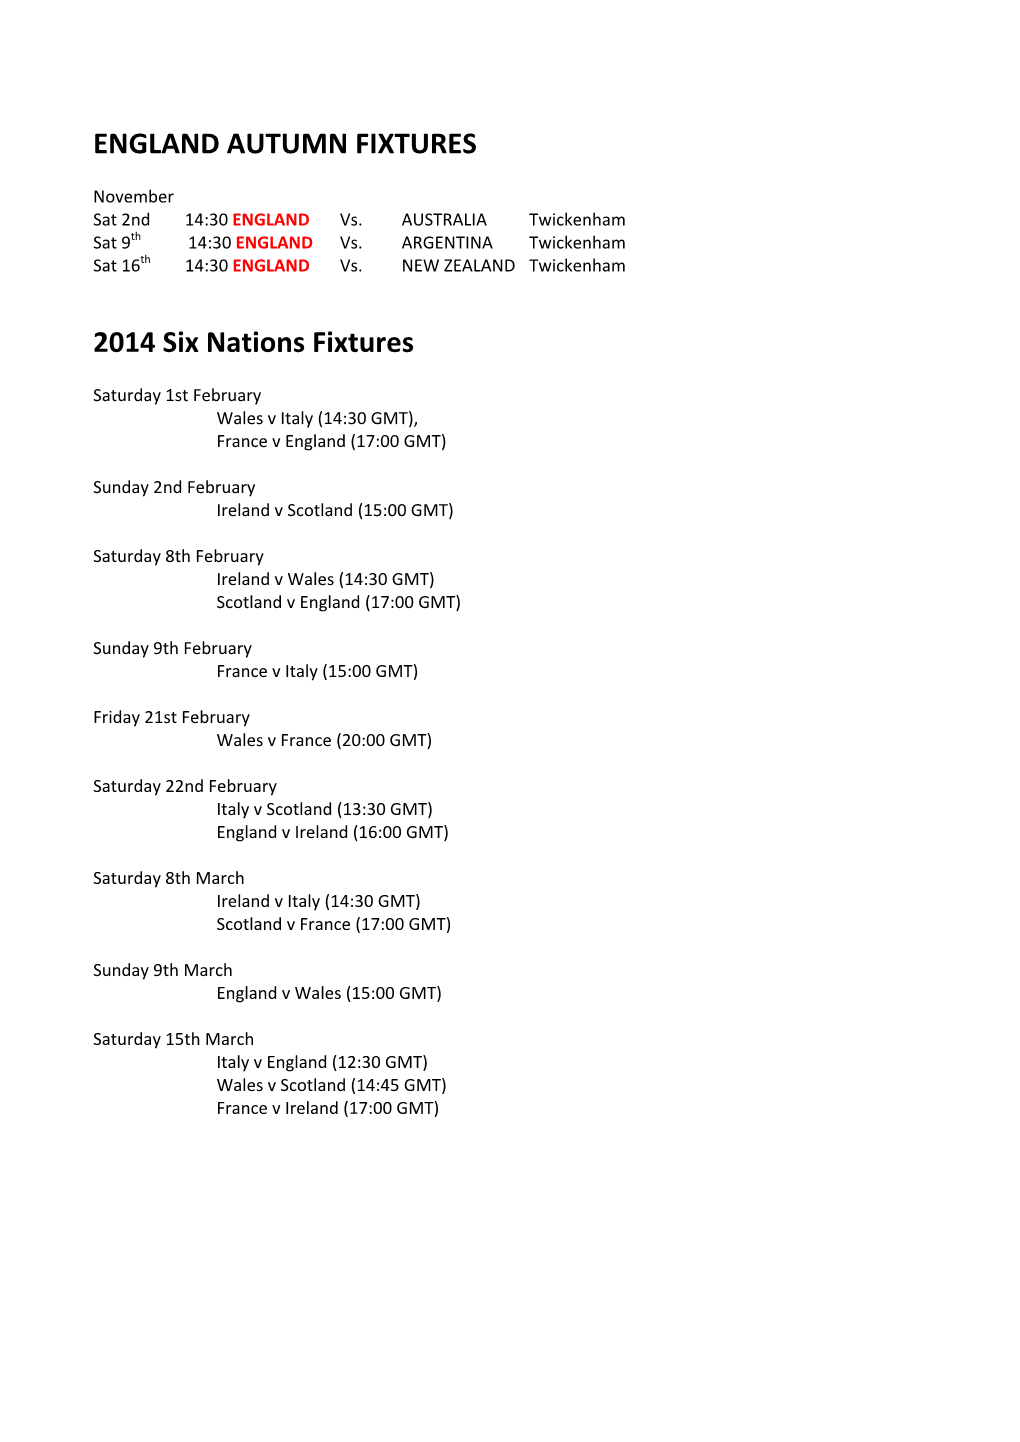 ENGLAND AUTUMN FIXTURES 2014 Six Nations Fixtures